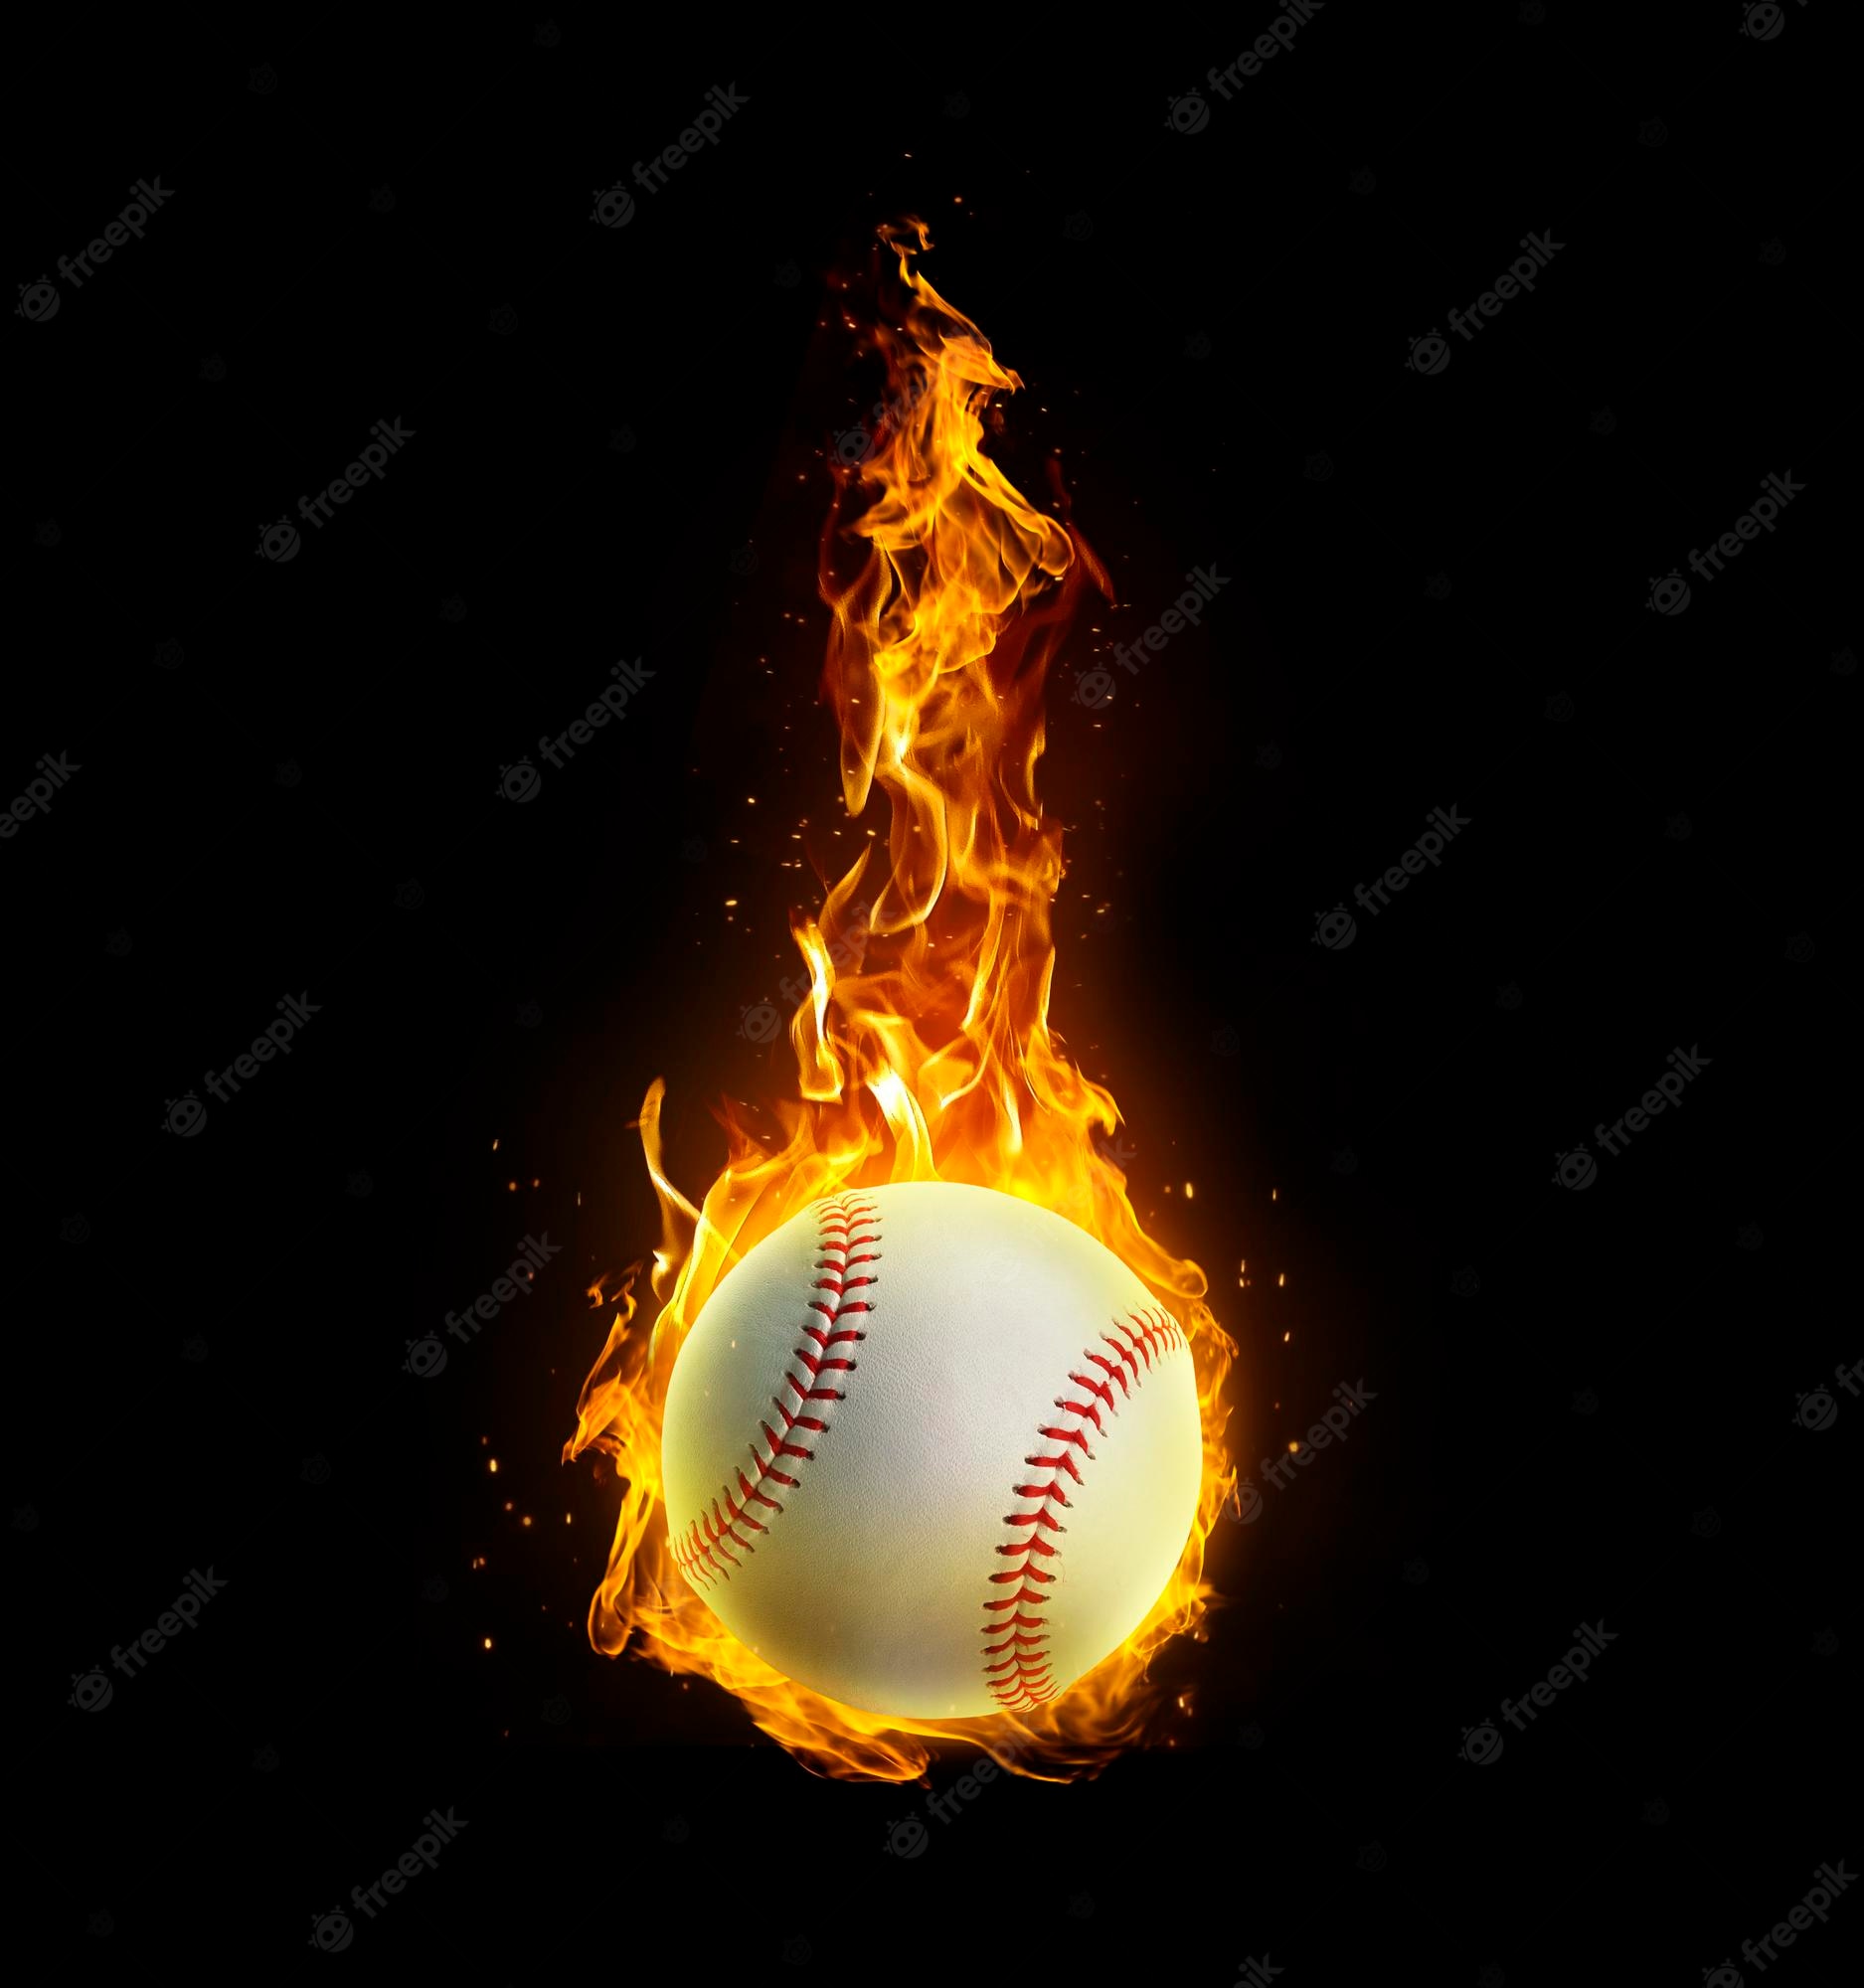 Baseball On Fire Image. Free Vectors, & PSD